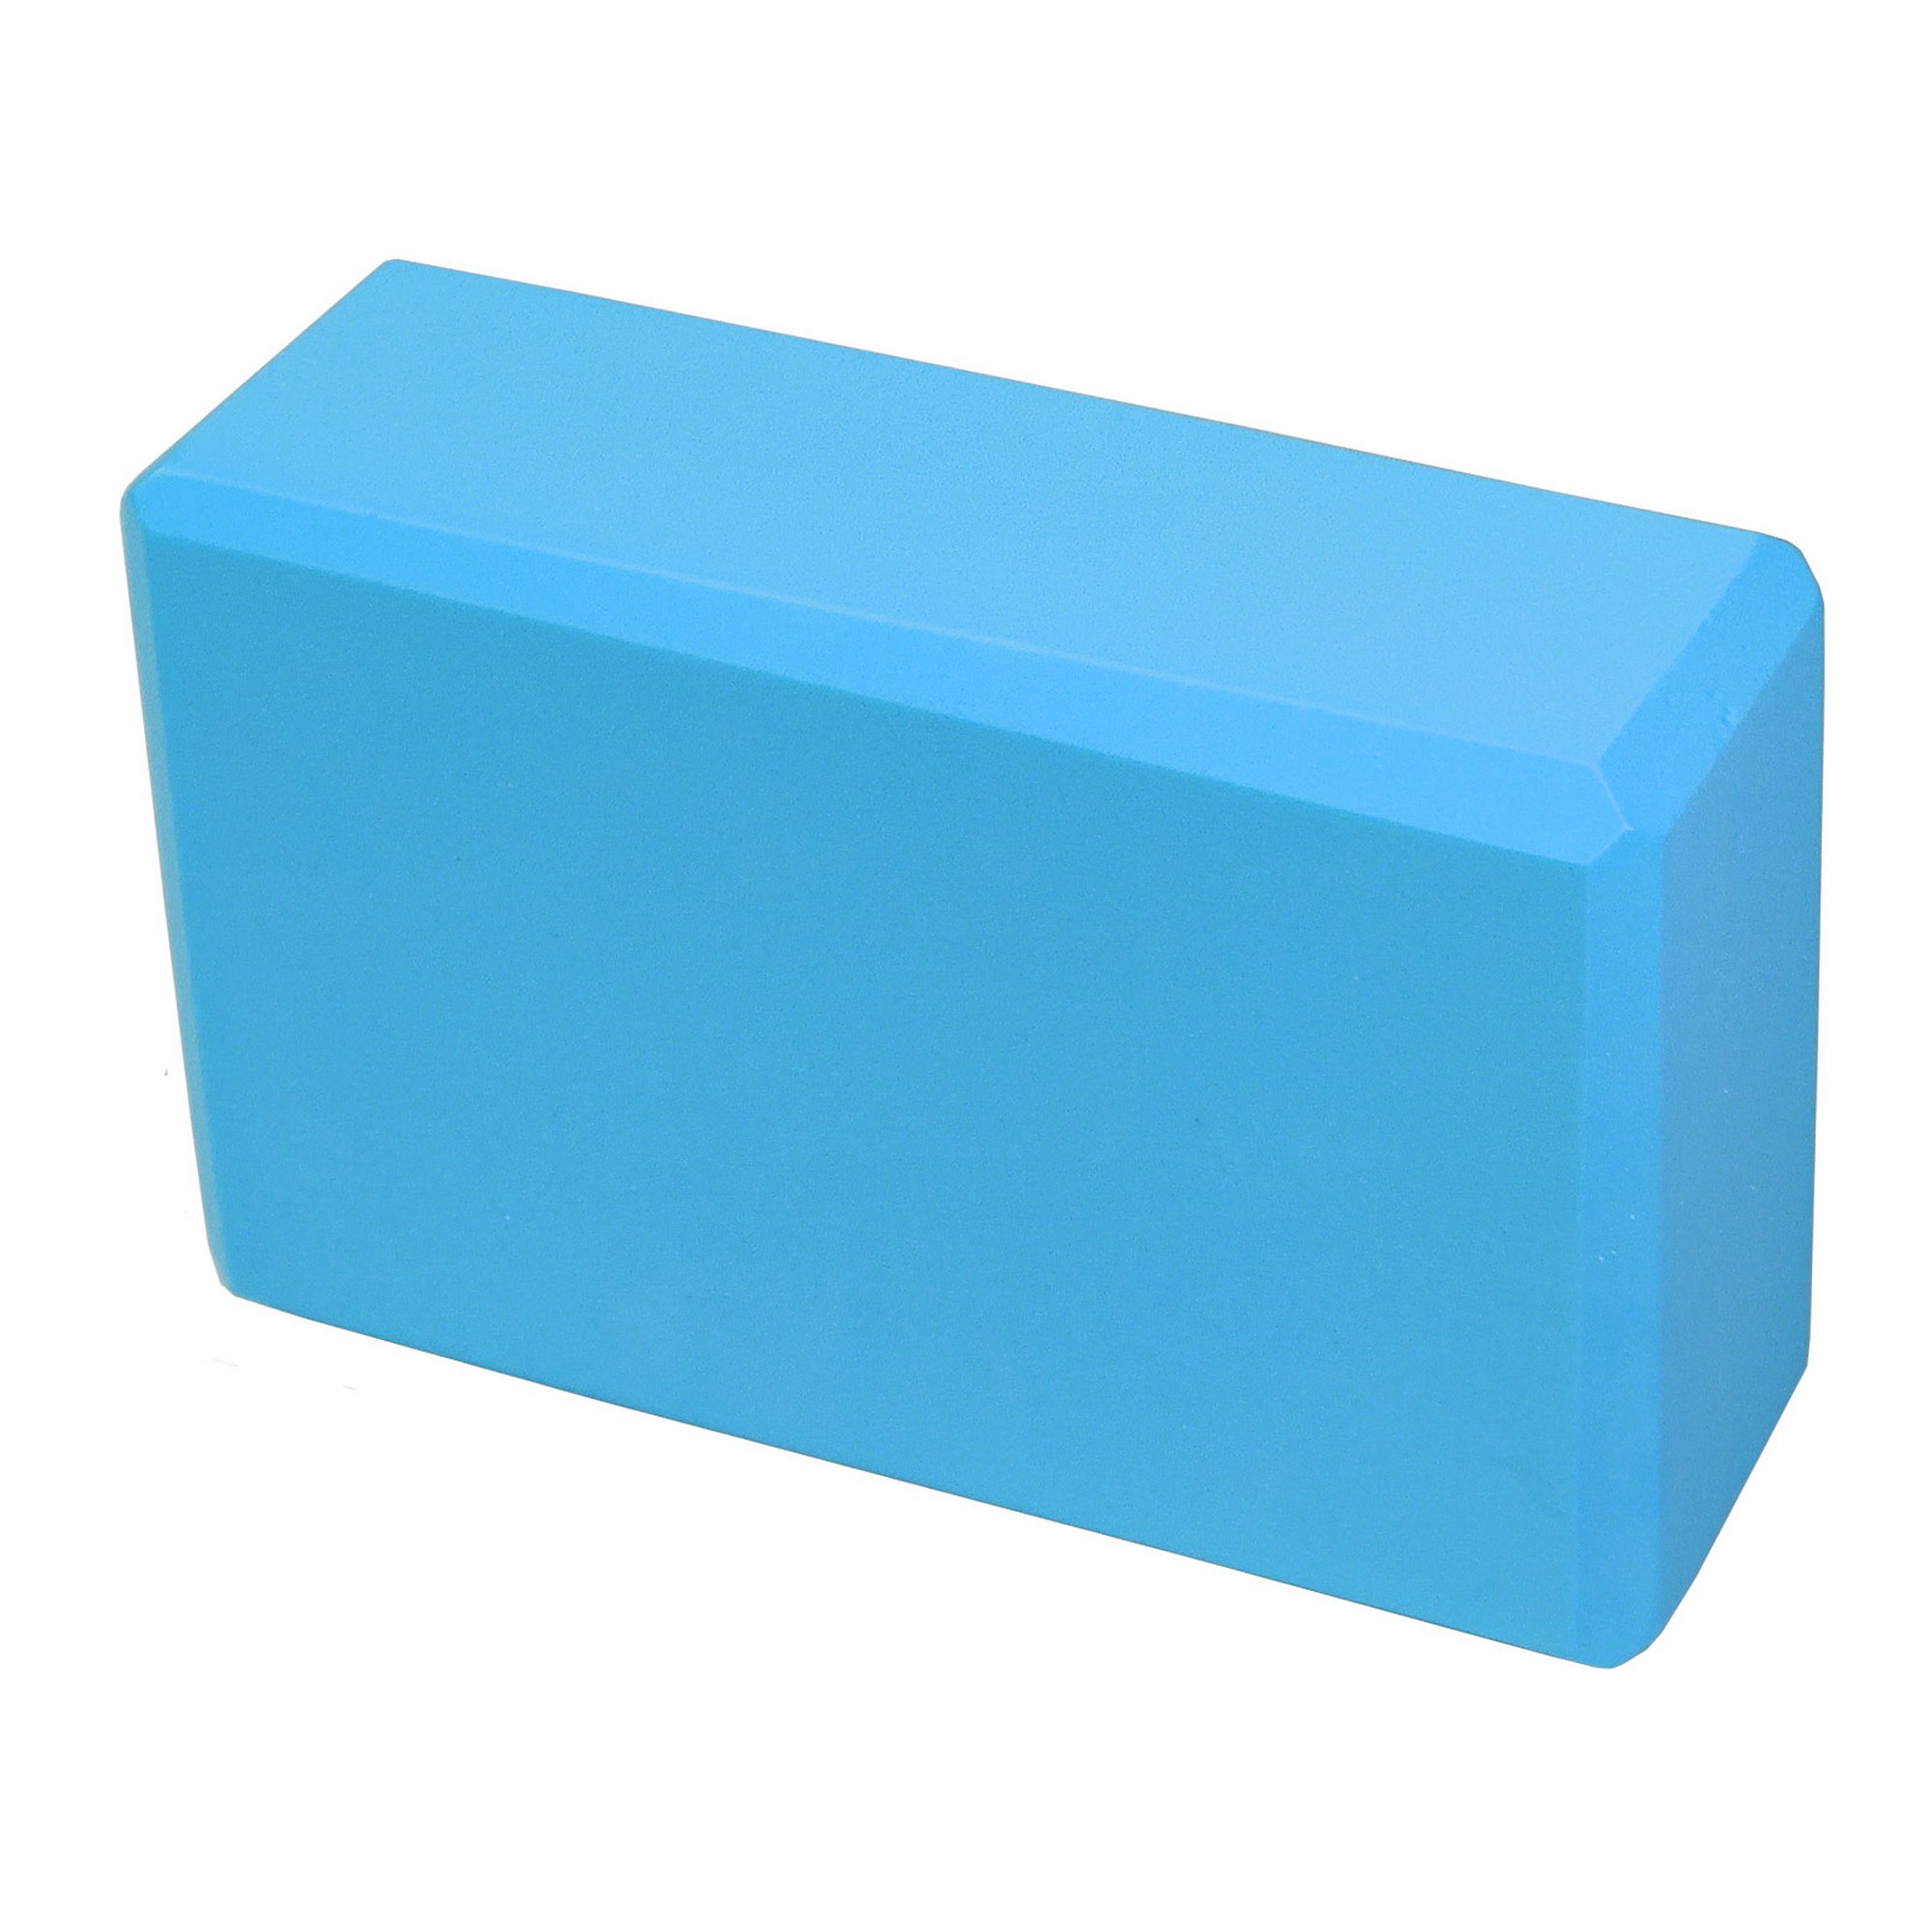 Йога блок Sportex полумягкий, из вспененного ЭВА 22,3х15х7,6 см E39131-11 синий